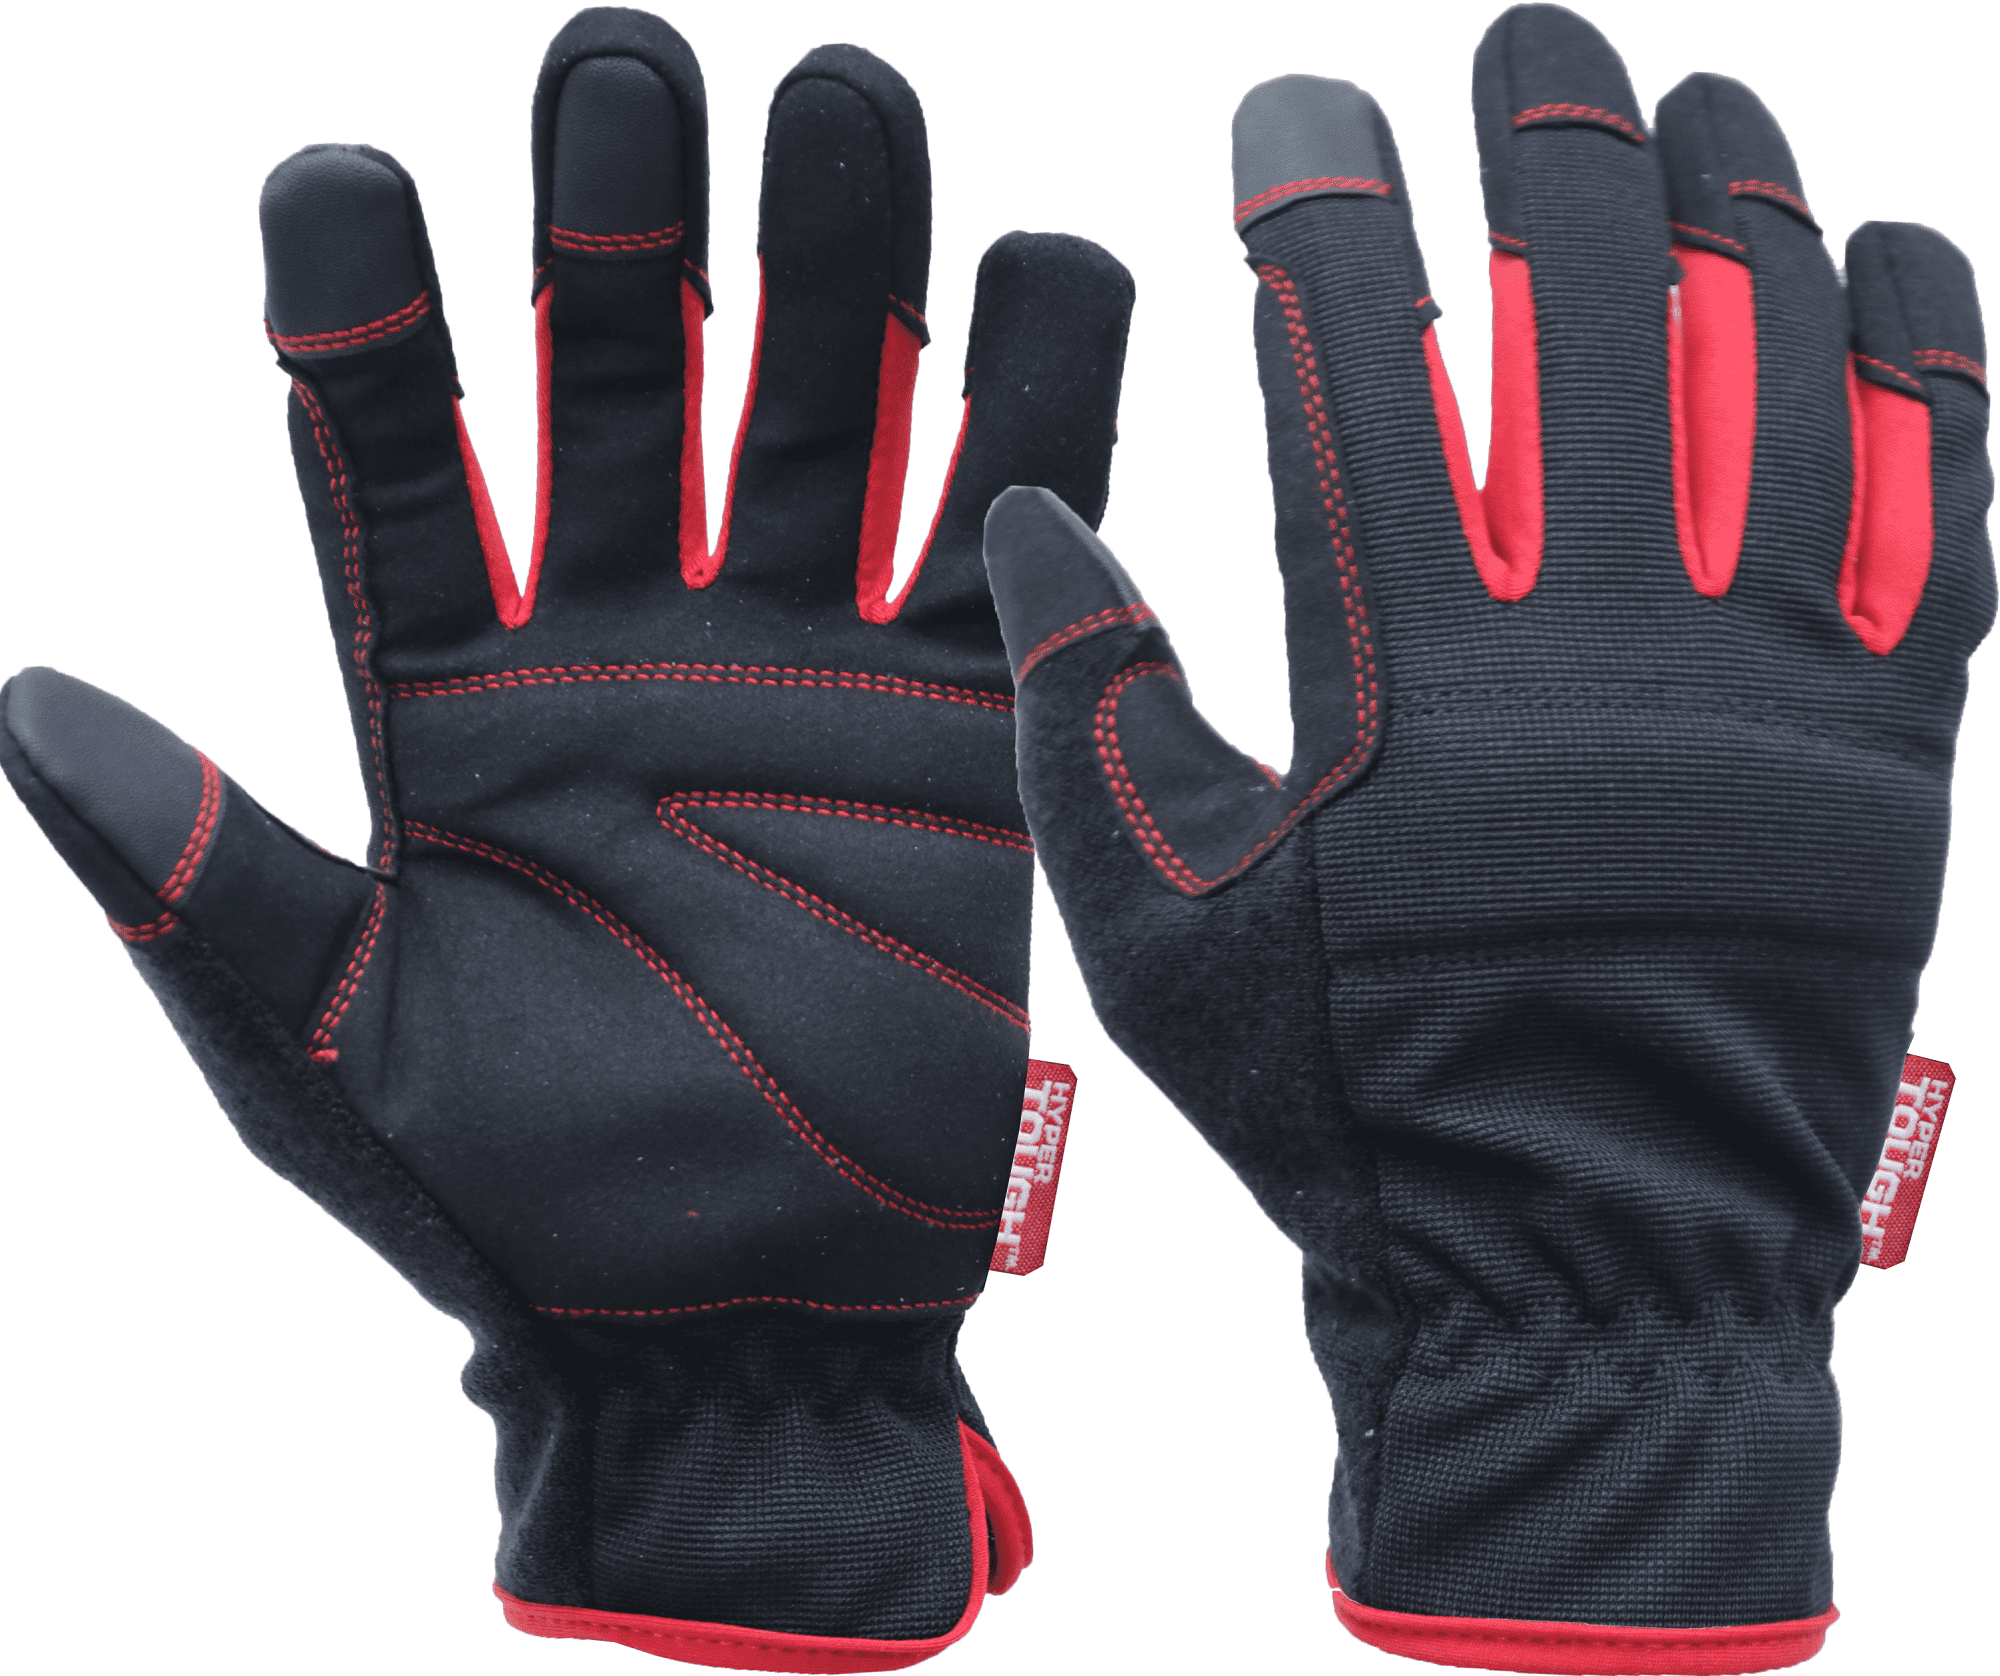 Milwaukee Work Gloves 48-22-8721, Size Medium, Red, Black, Gray